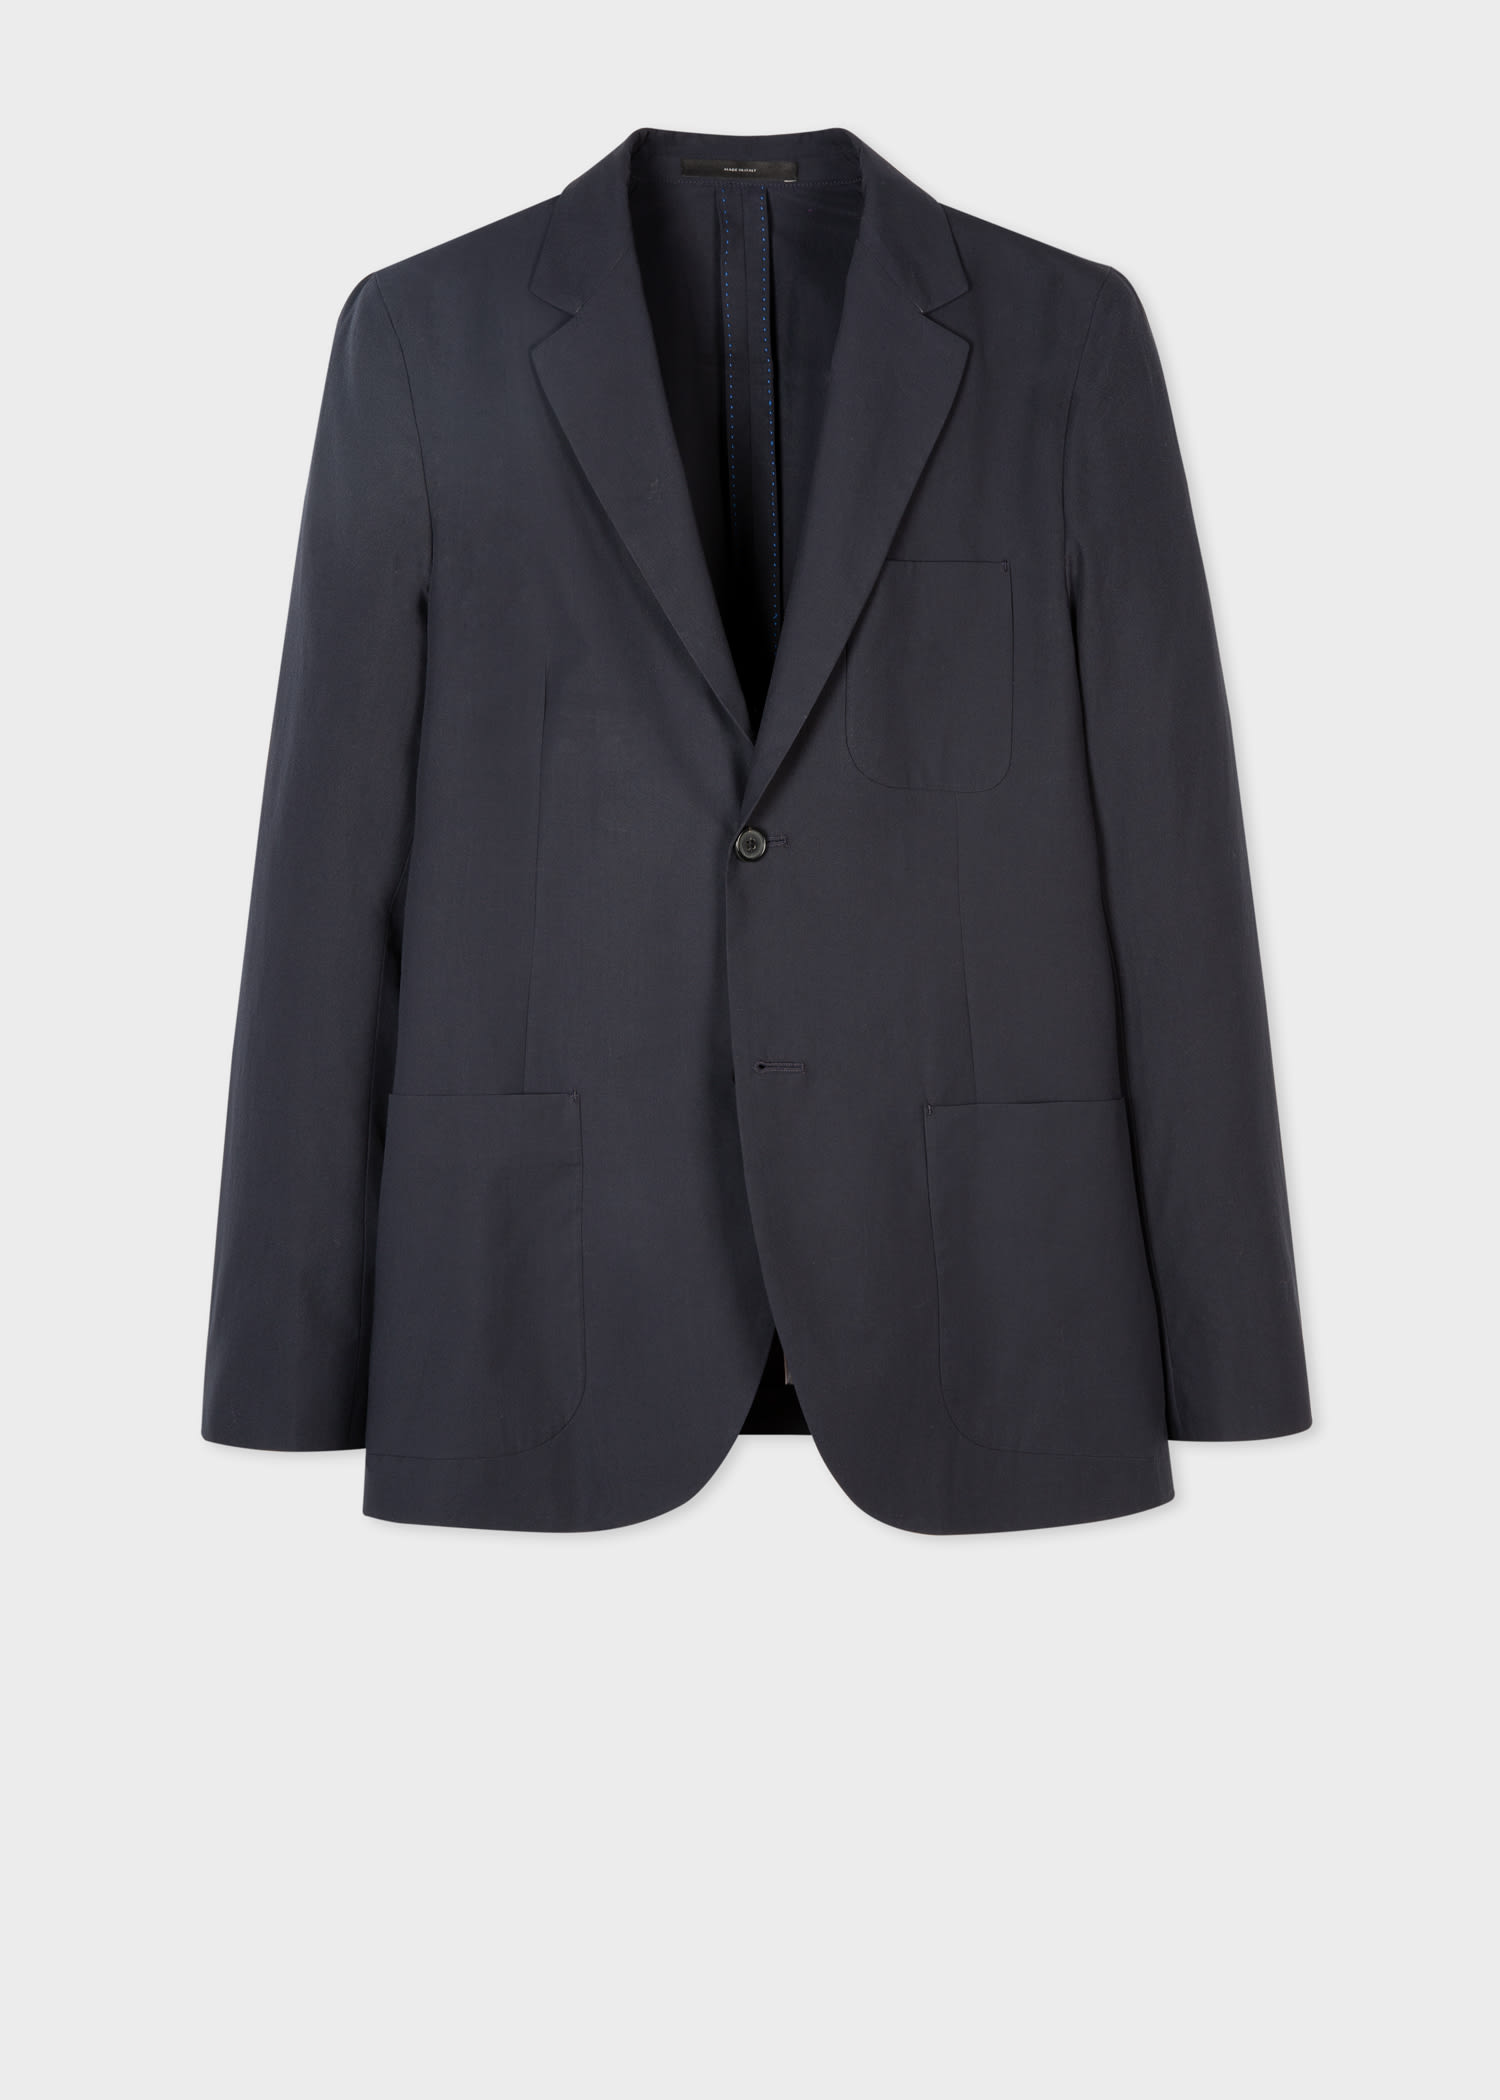 Men's Designer Blazers | Wool, Cotton & Linen Blazer Jackets - Paul Smith